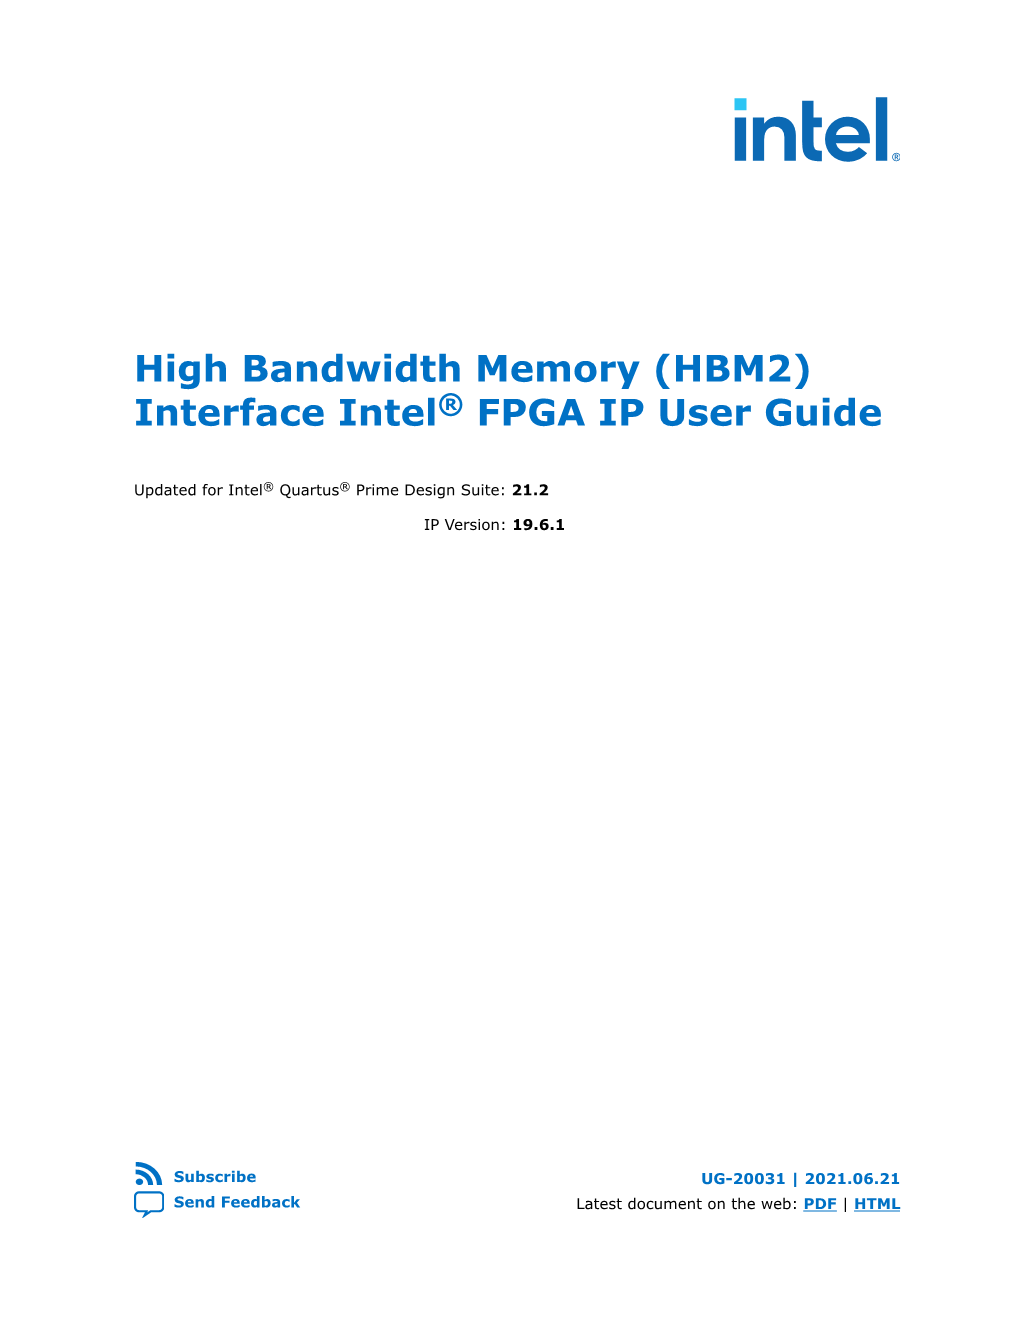 High Bandwidth Memory (HBM2) Interface Intel® FPGA IP User Guide